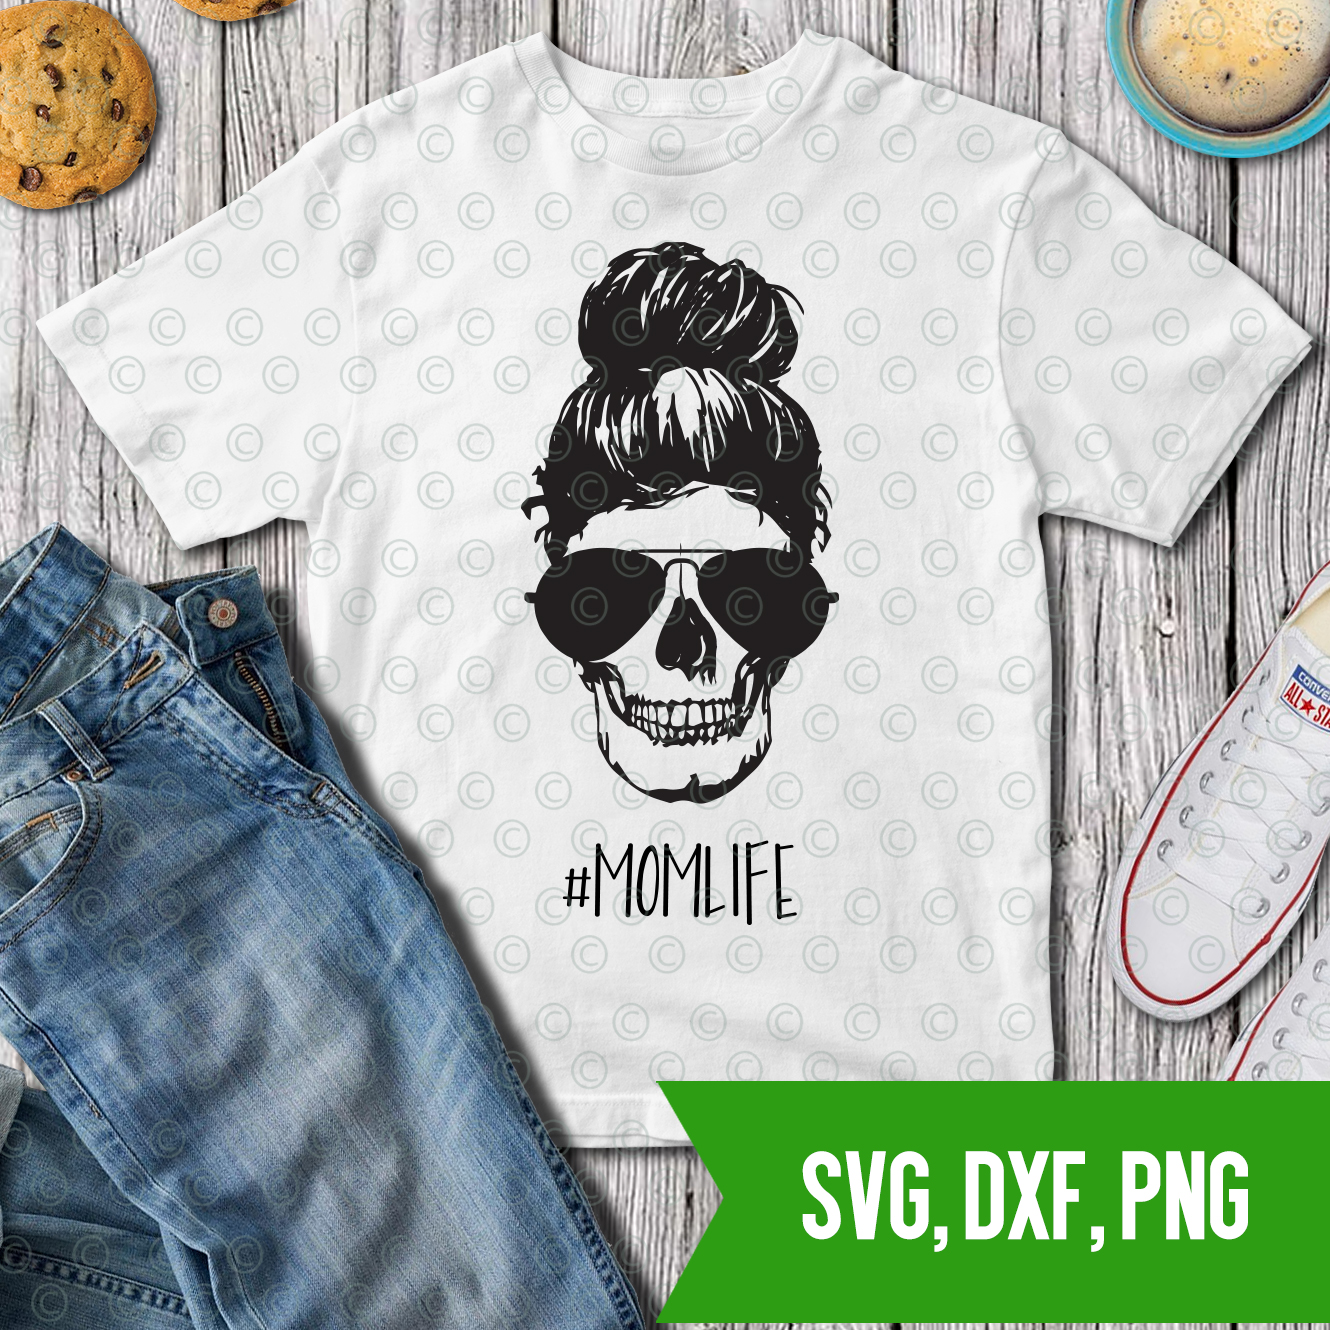 Momlife skull SVG DXF PNG Cutfiles